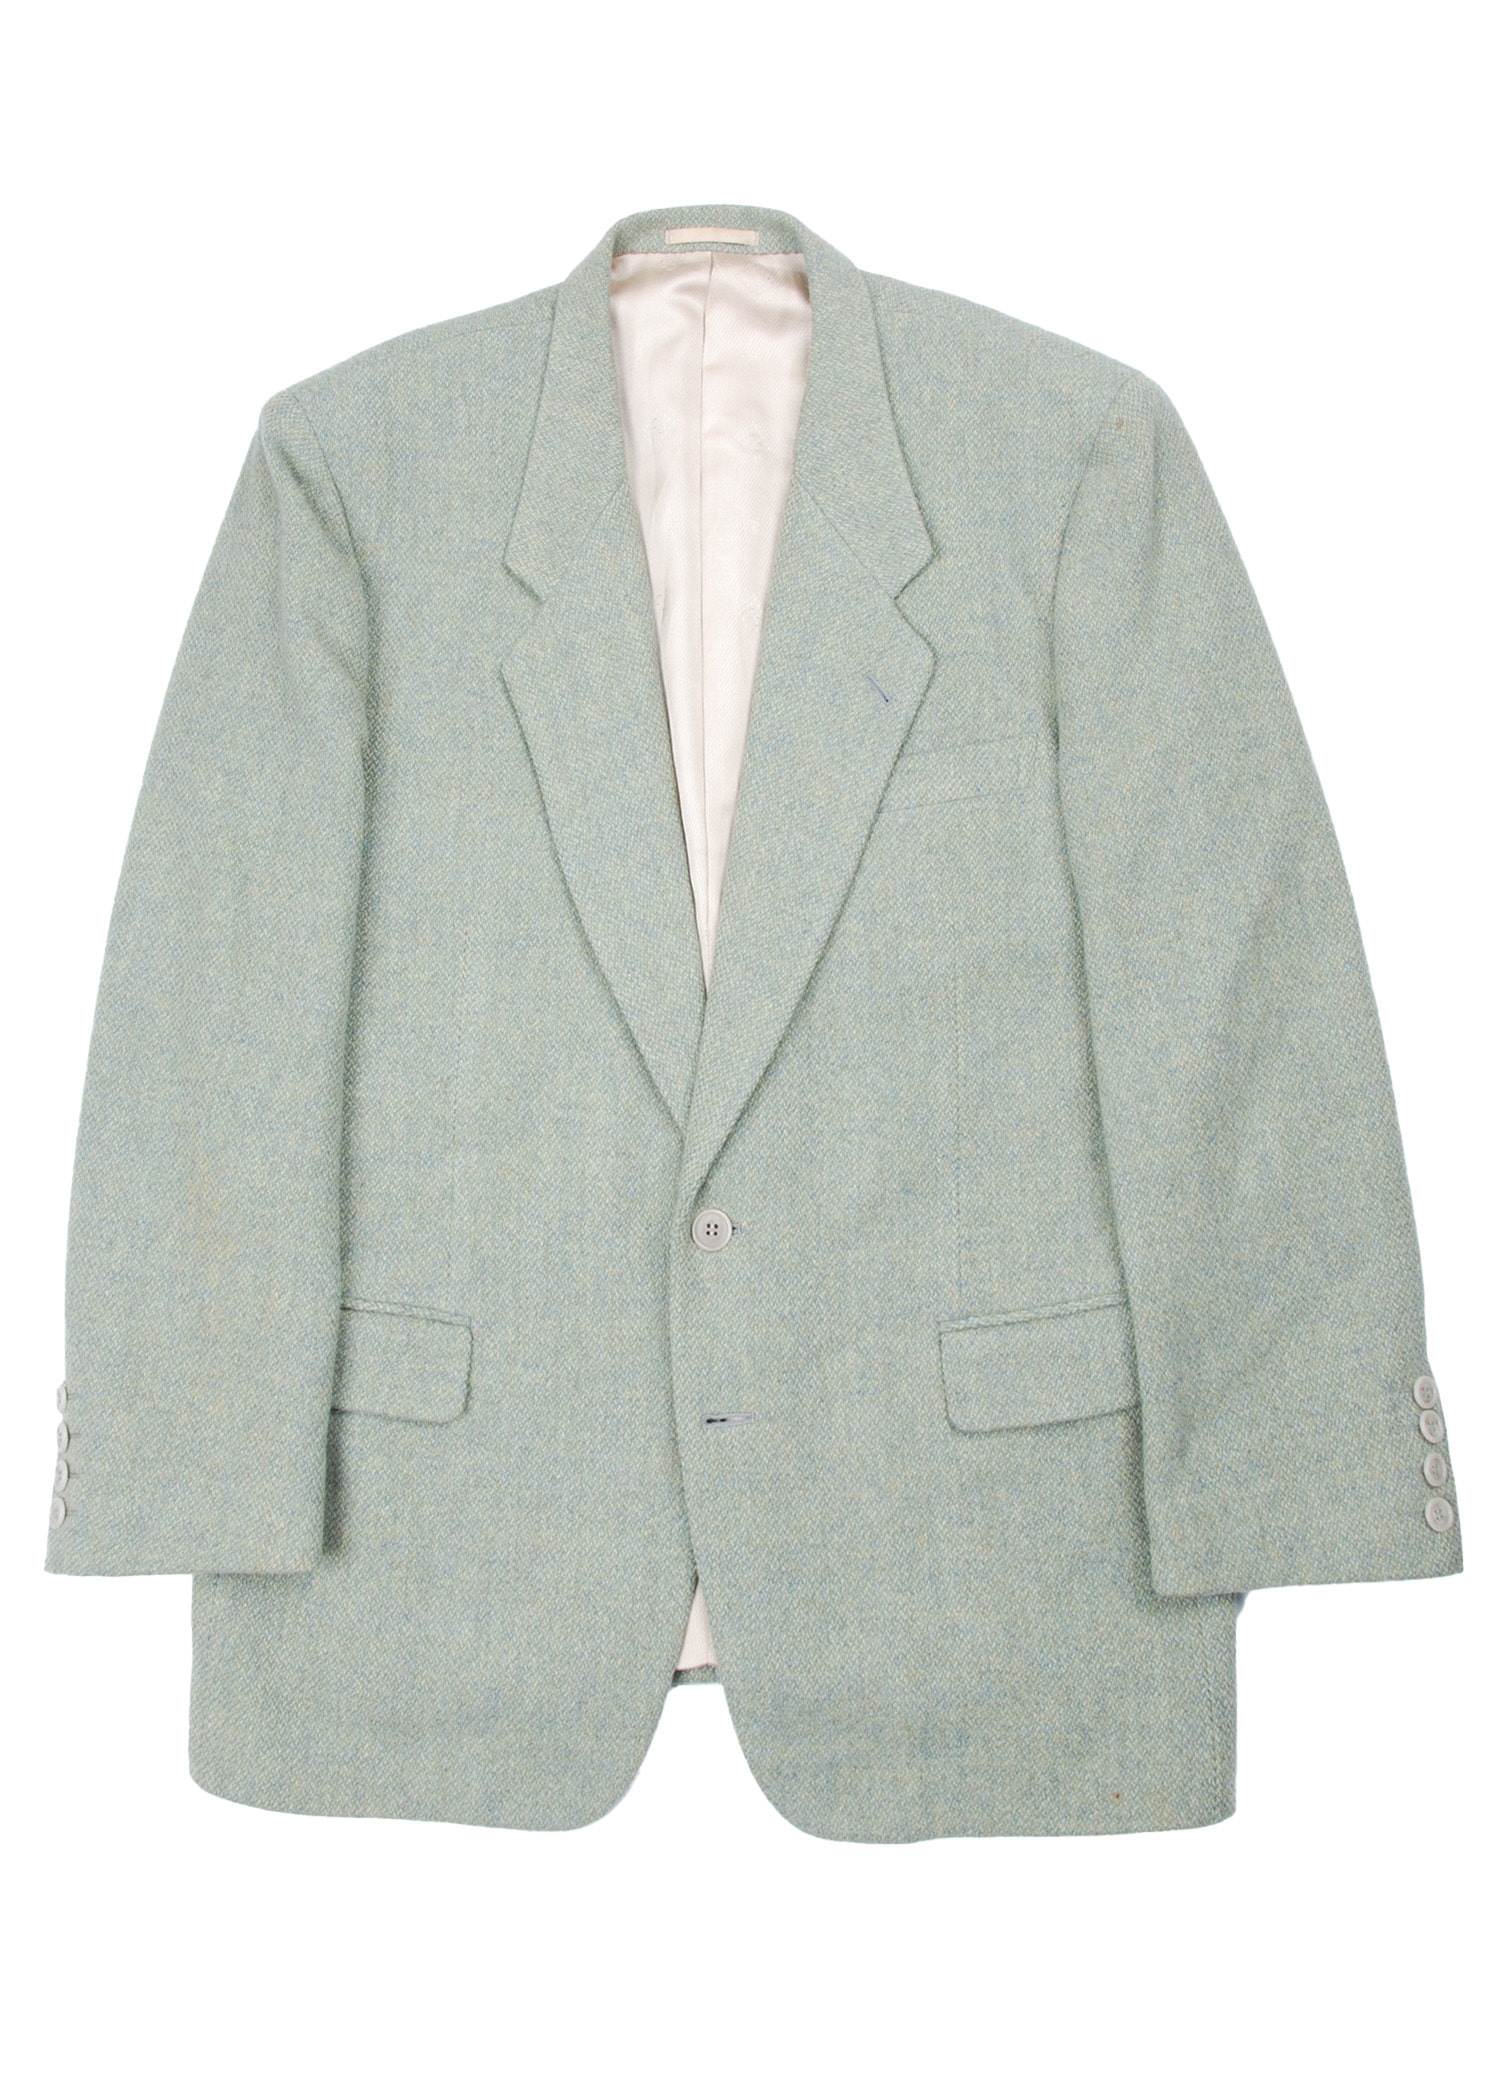 Christian Dior MONSIEUR jacket